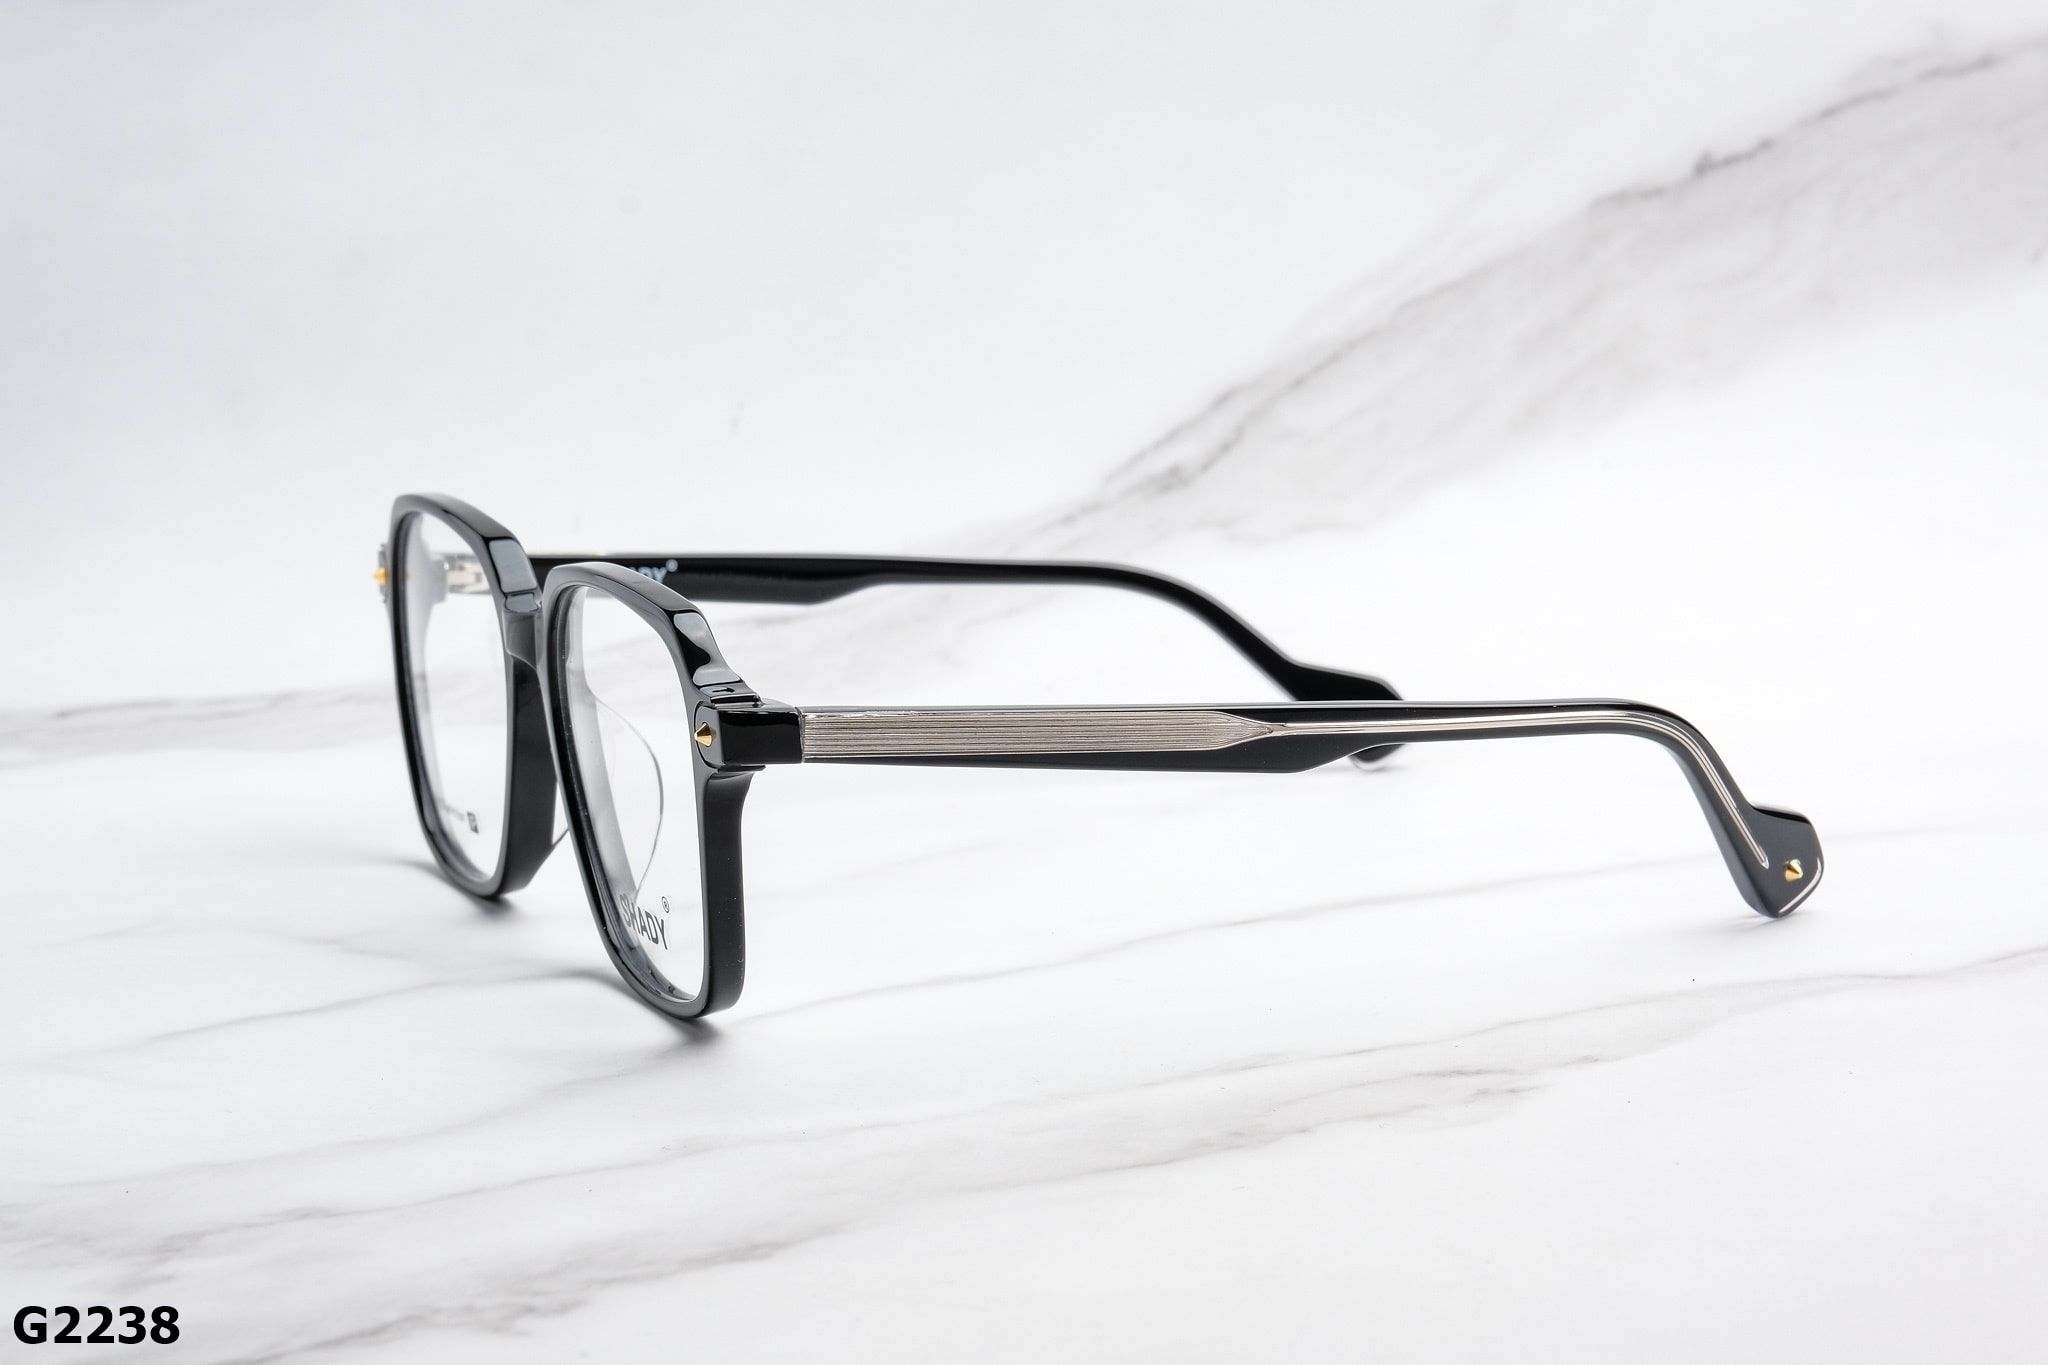  SHADY Eyewear - Glasses - G2238 